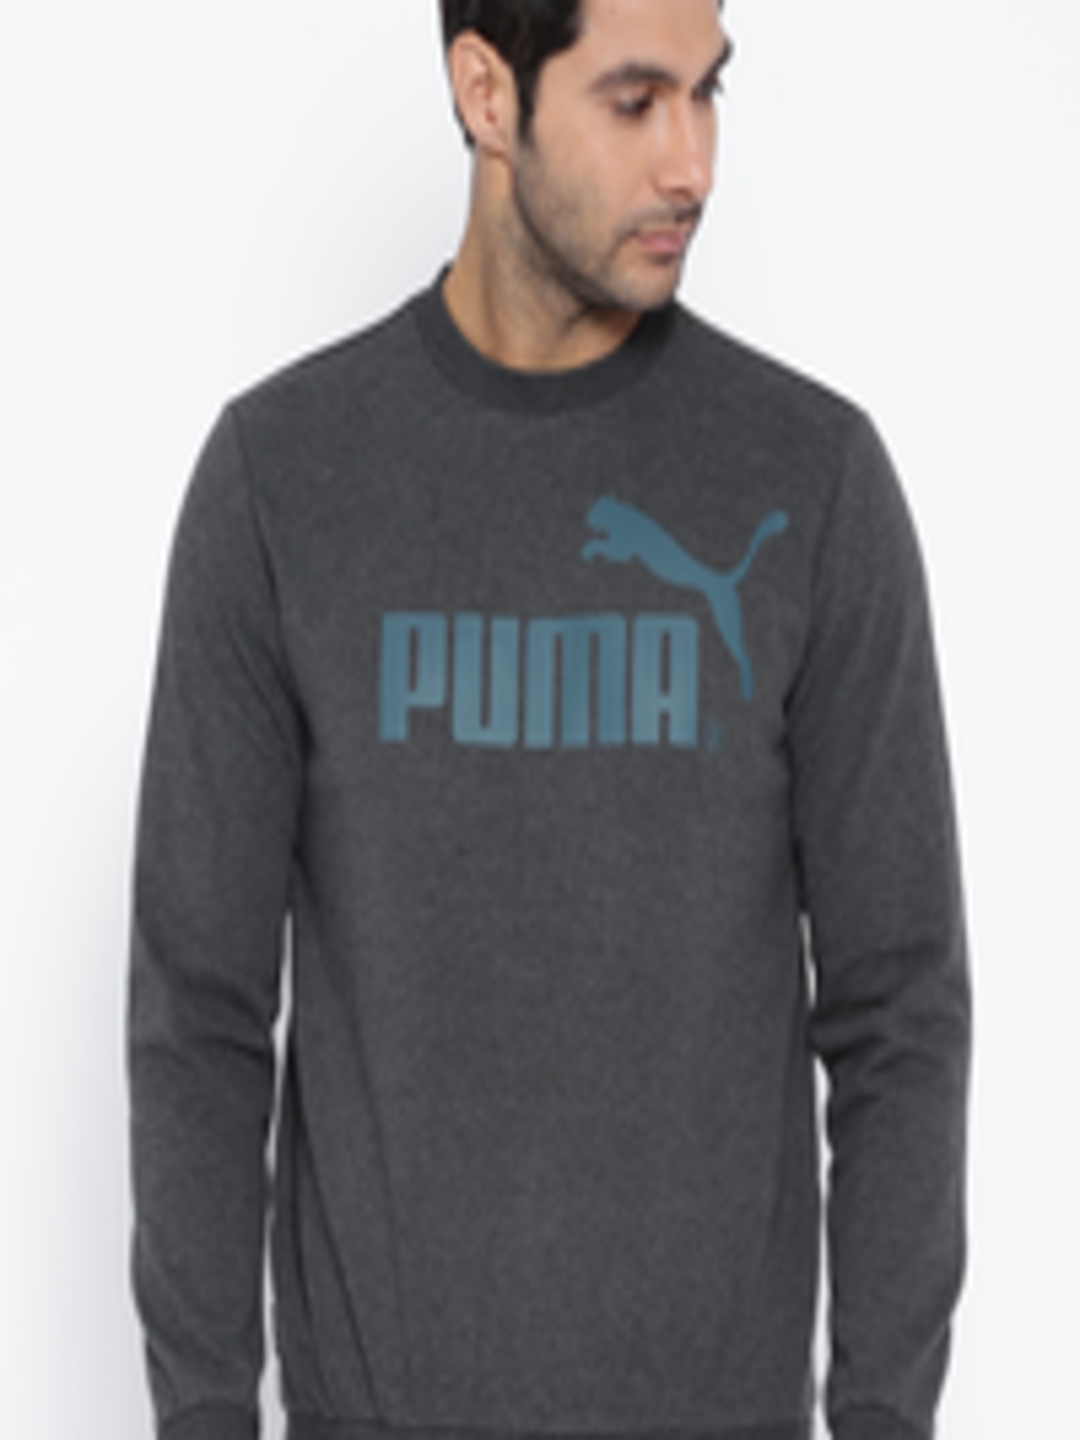 Buy Puma Charcoal Grey Melange Printed Sweatshirt - Sweatshirts for Men ...